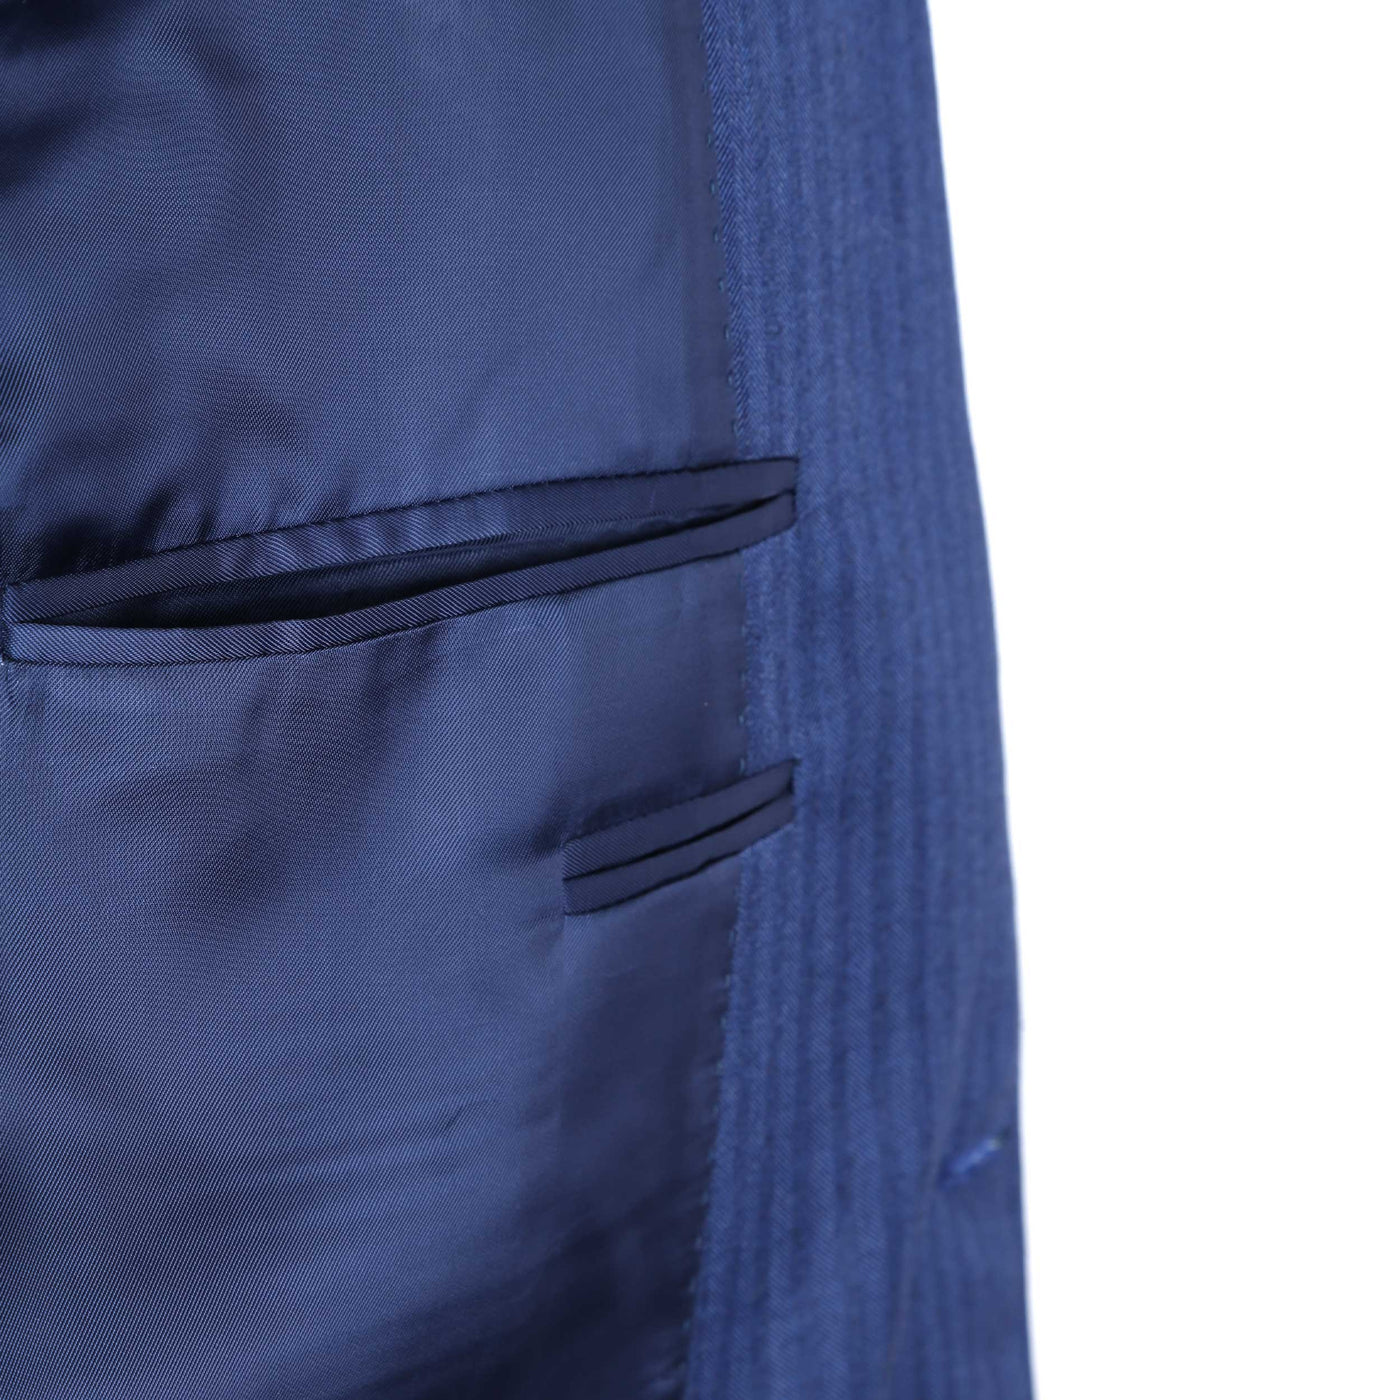 Canali Herringbone Notch Lapel Suit in Mid Blue Inside 2